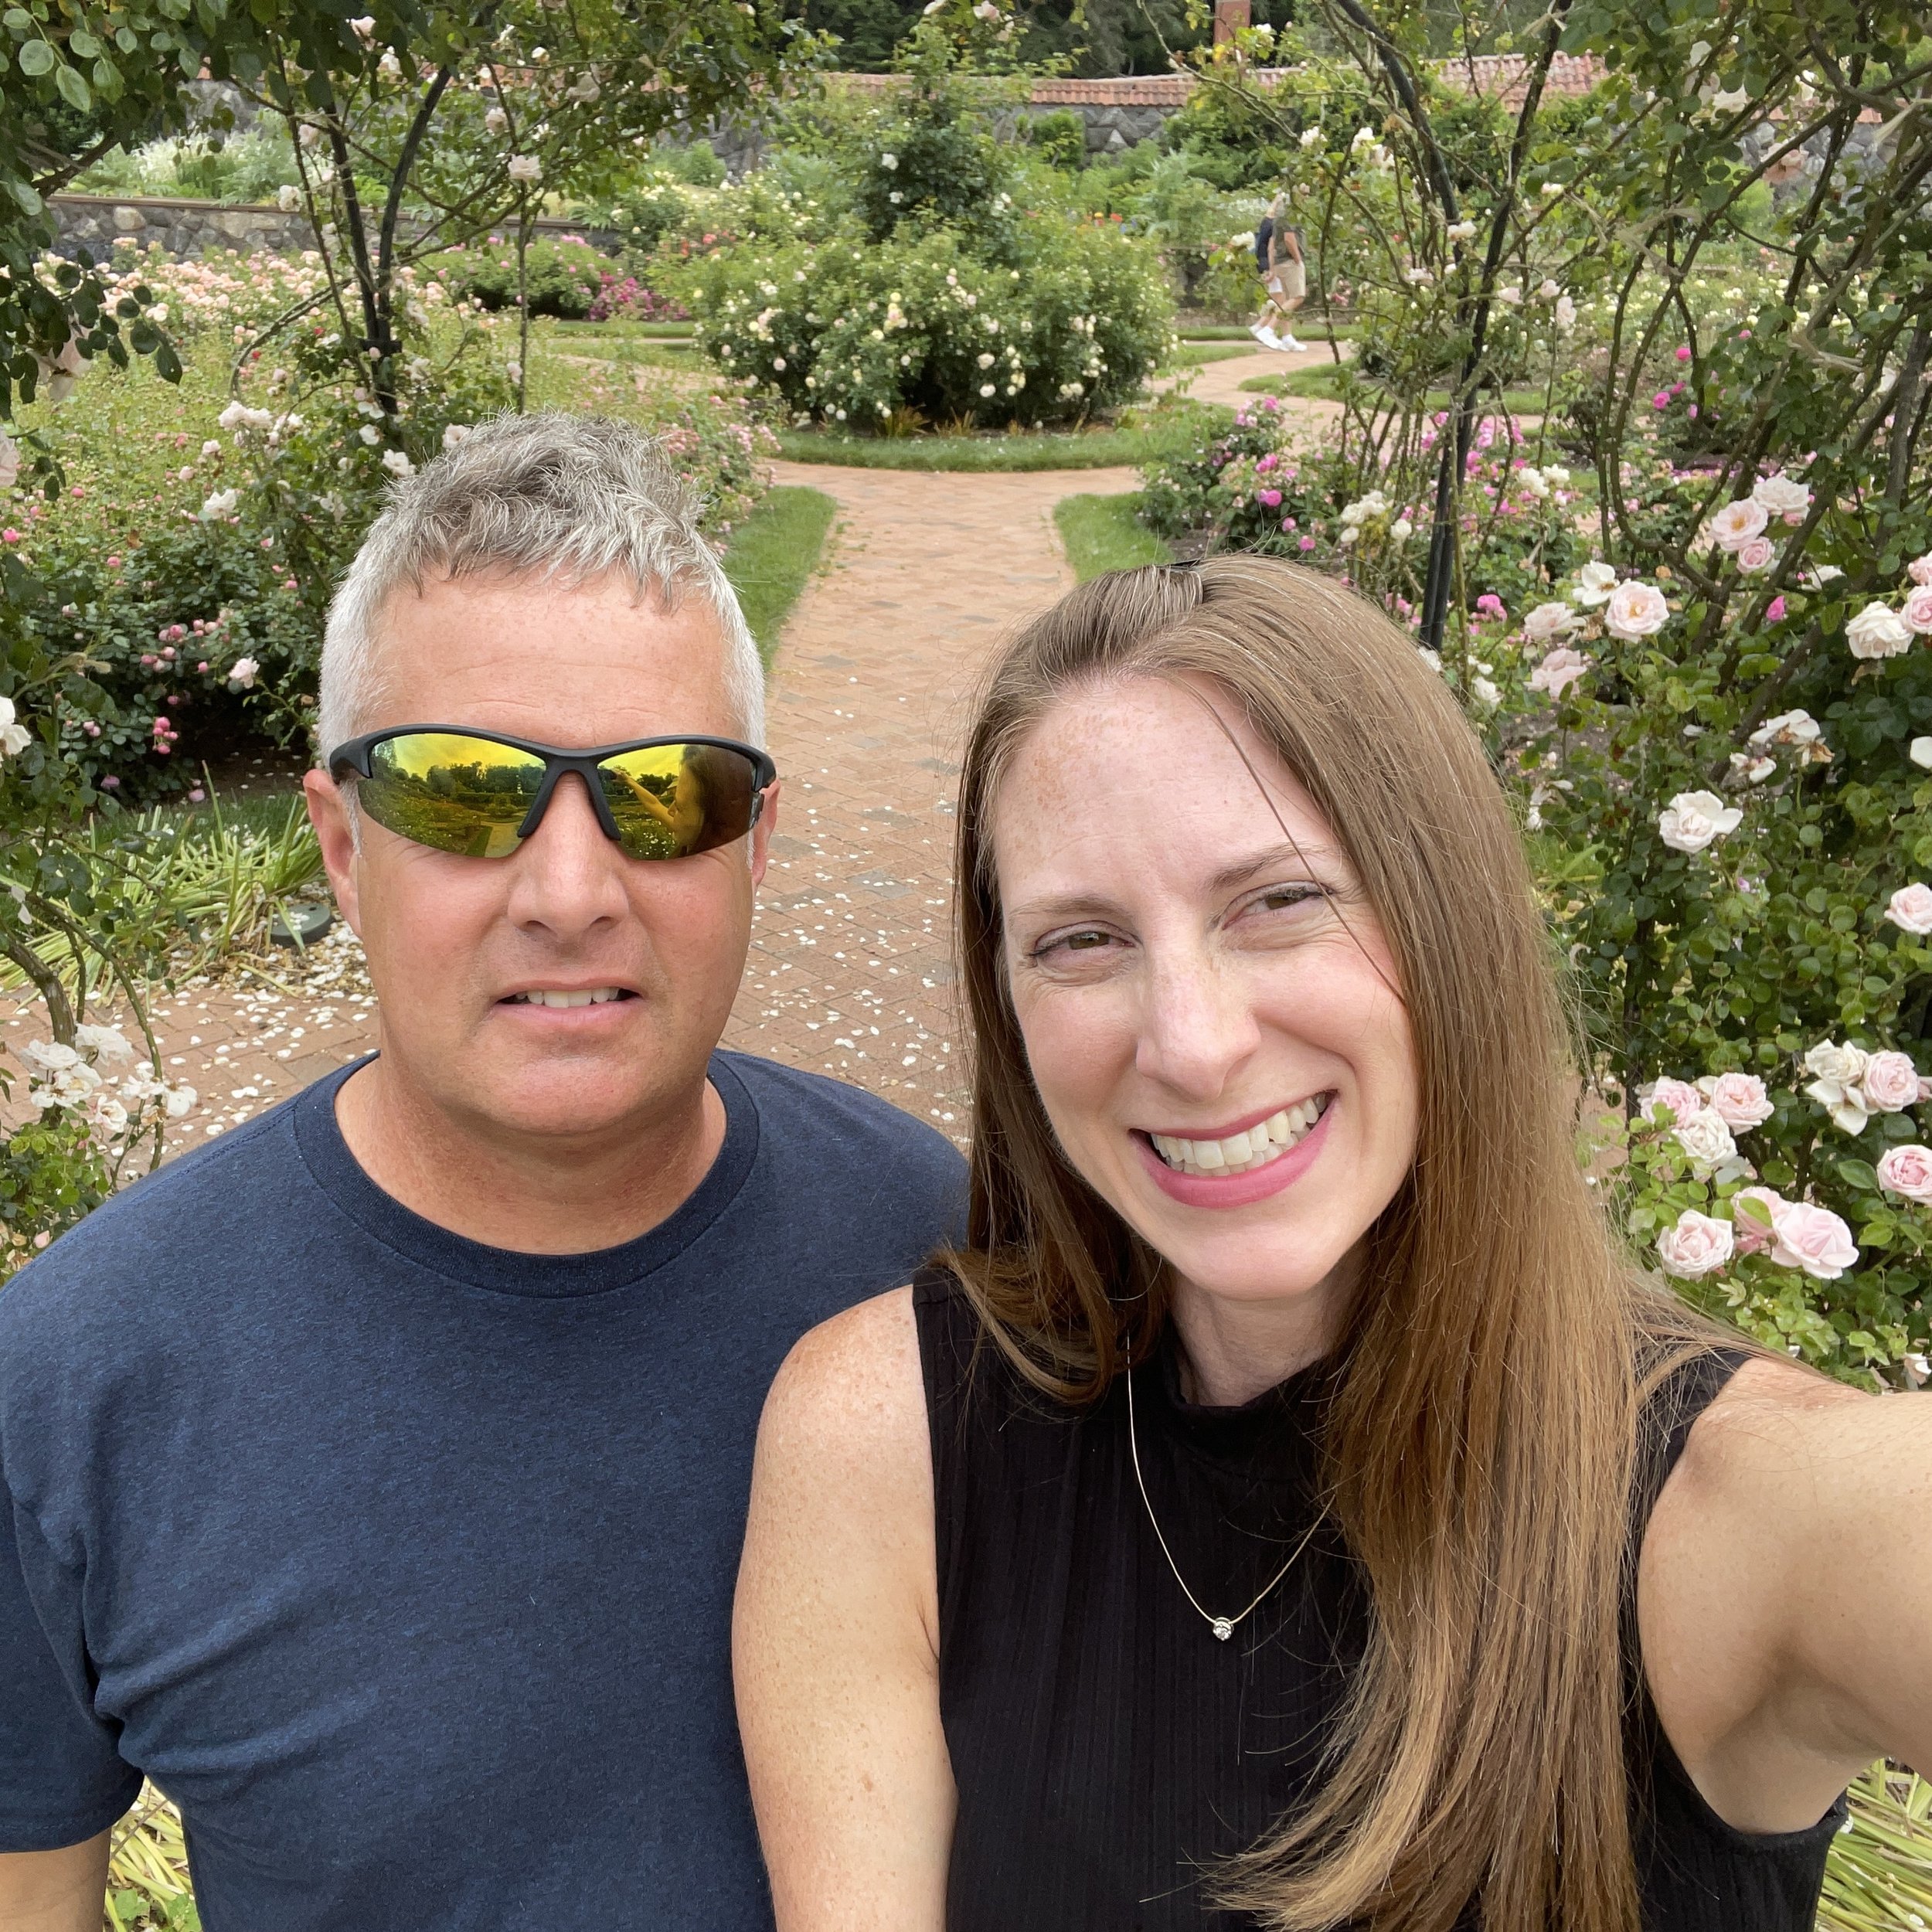 selfie at Biltmore gardens.jpg